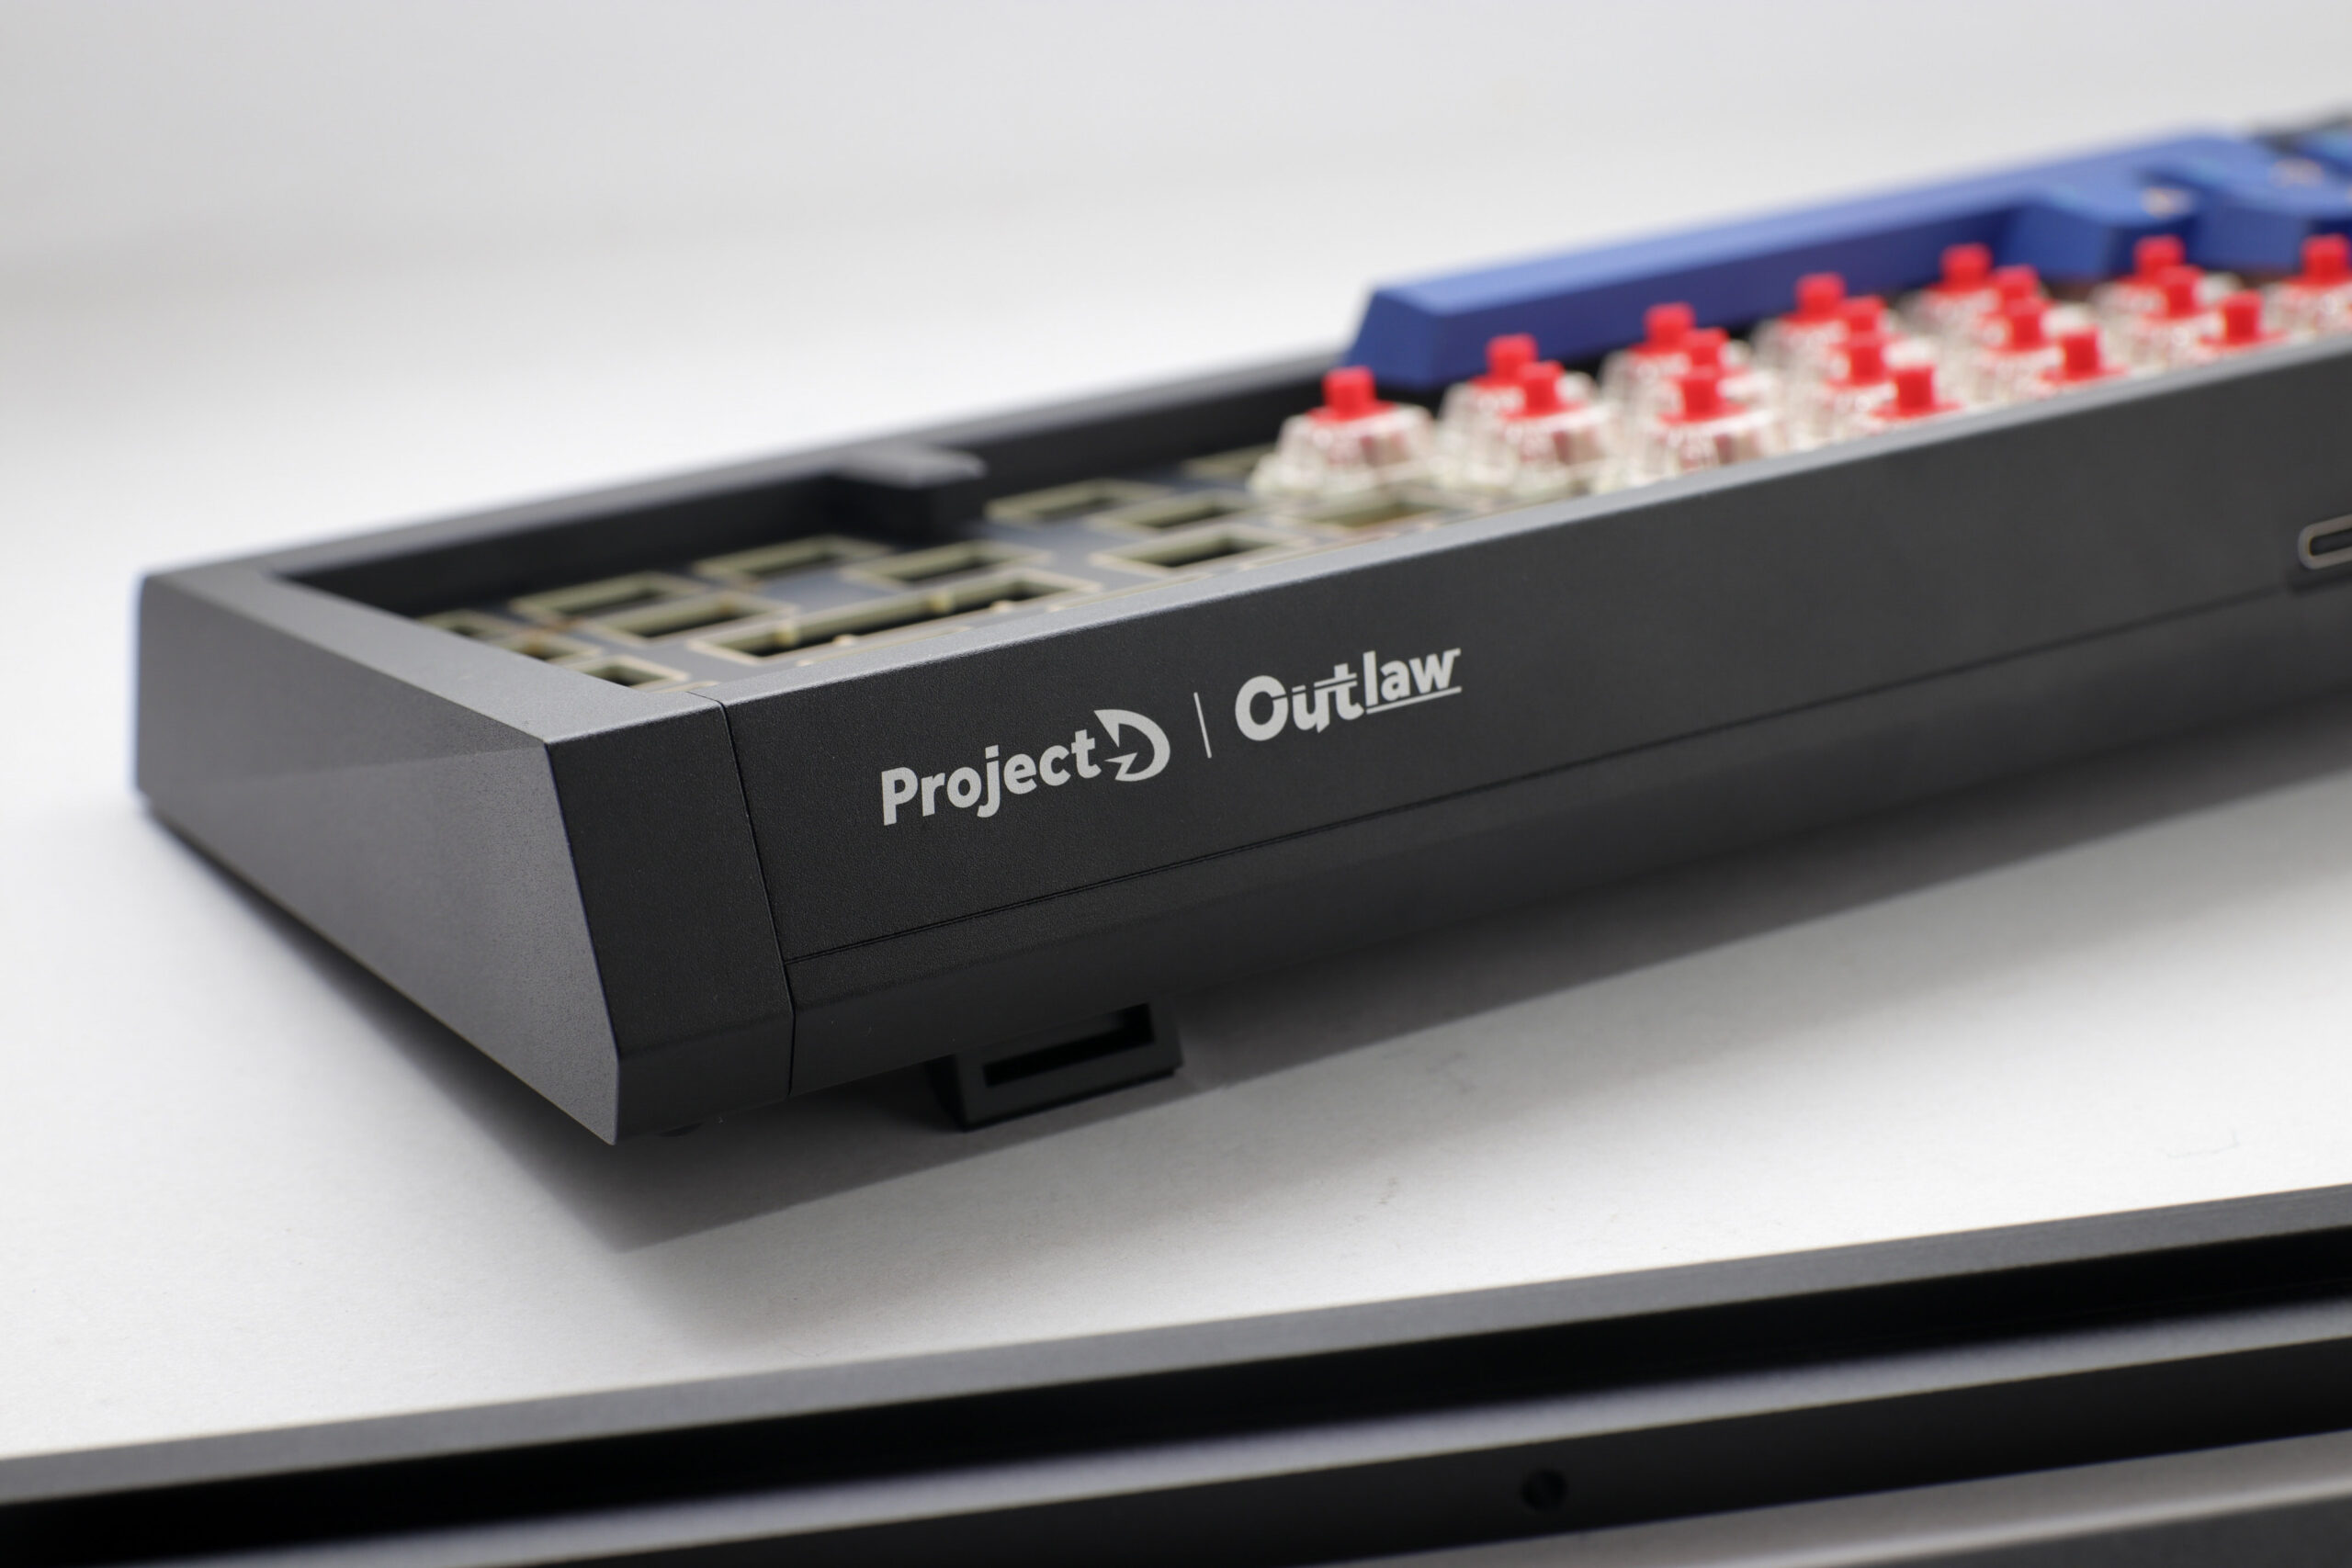 ProjectD 最強客製化機械式鍵盤 Outlaw 65 誕生！ 首批限量搭載全新 Cherry MX2A RGB 紅軸上市 @3C 達人廖阿輝